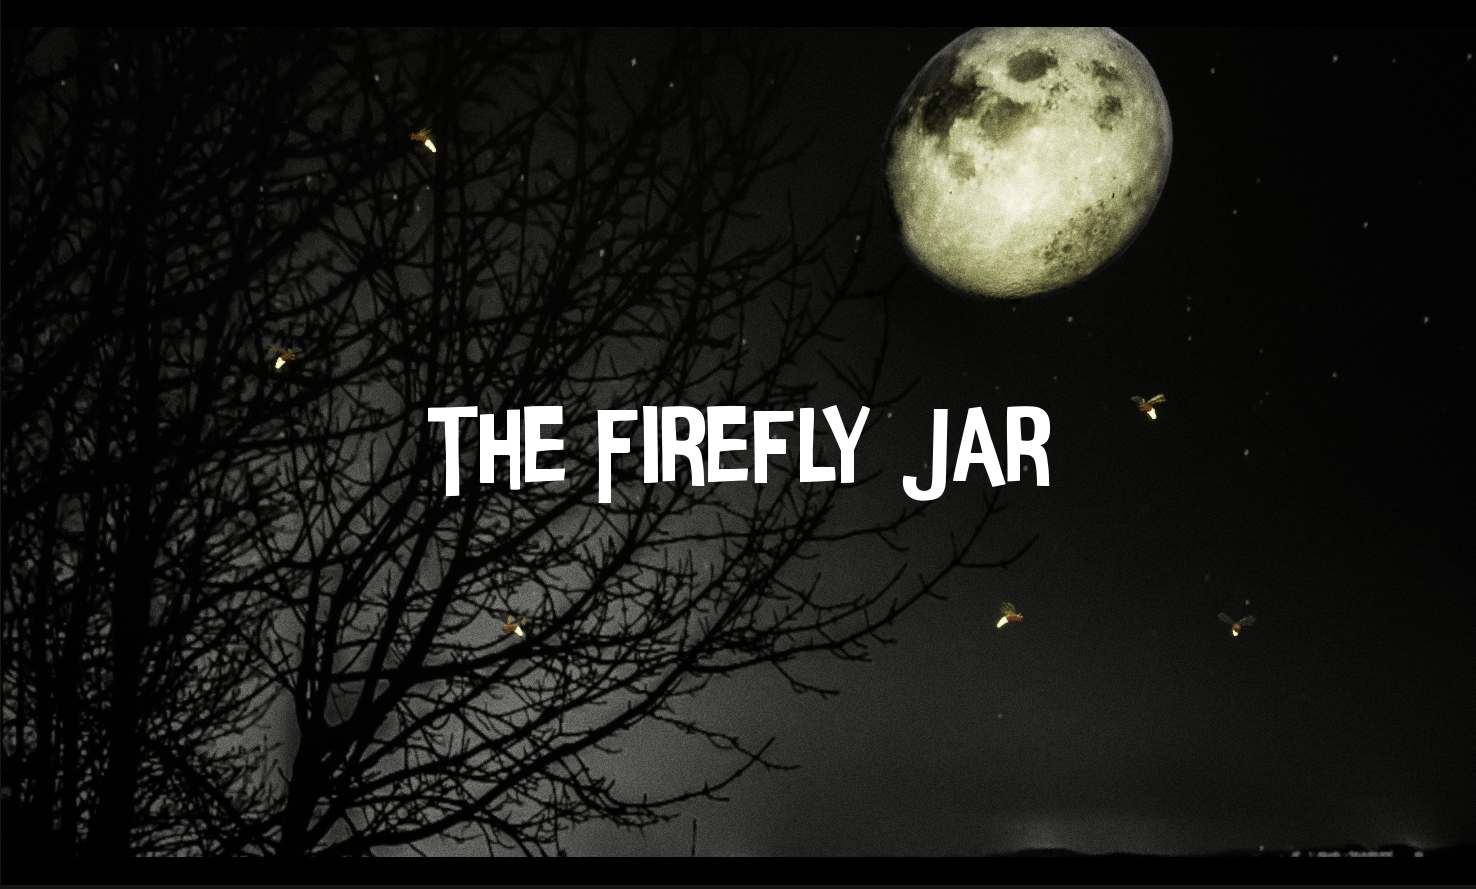 The Firefly Jar